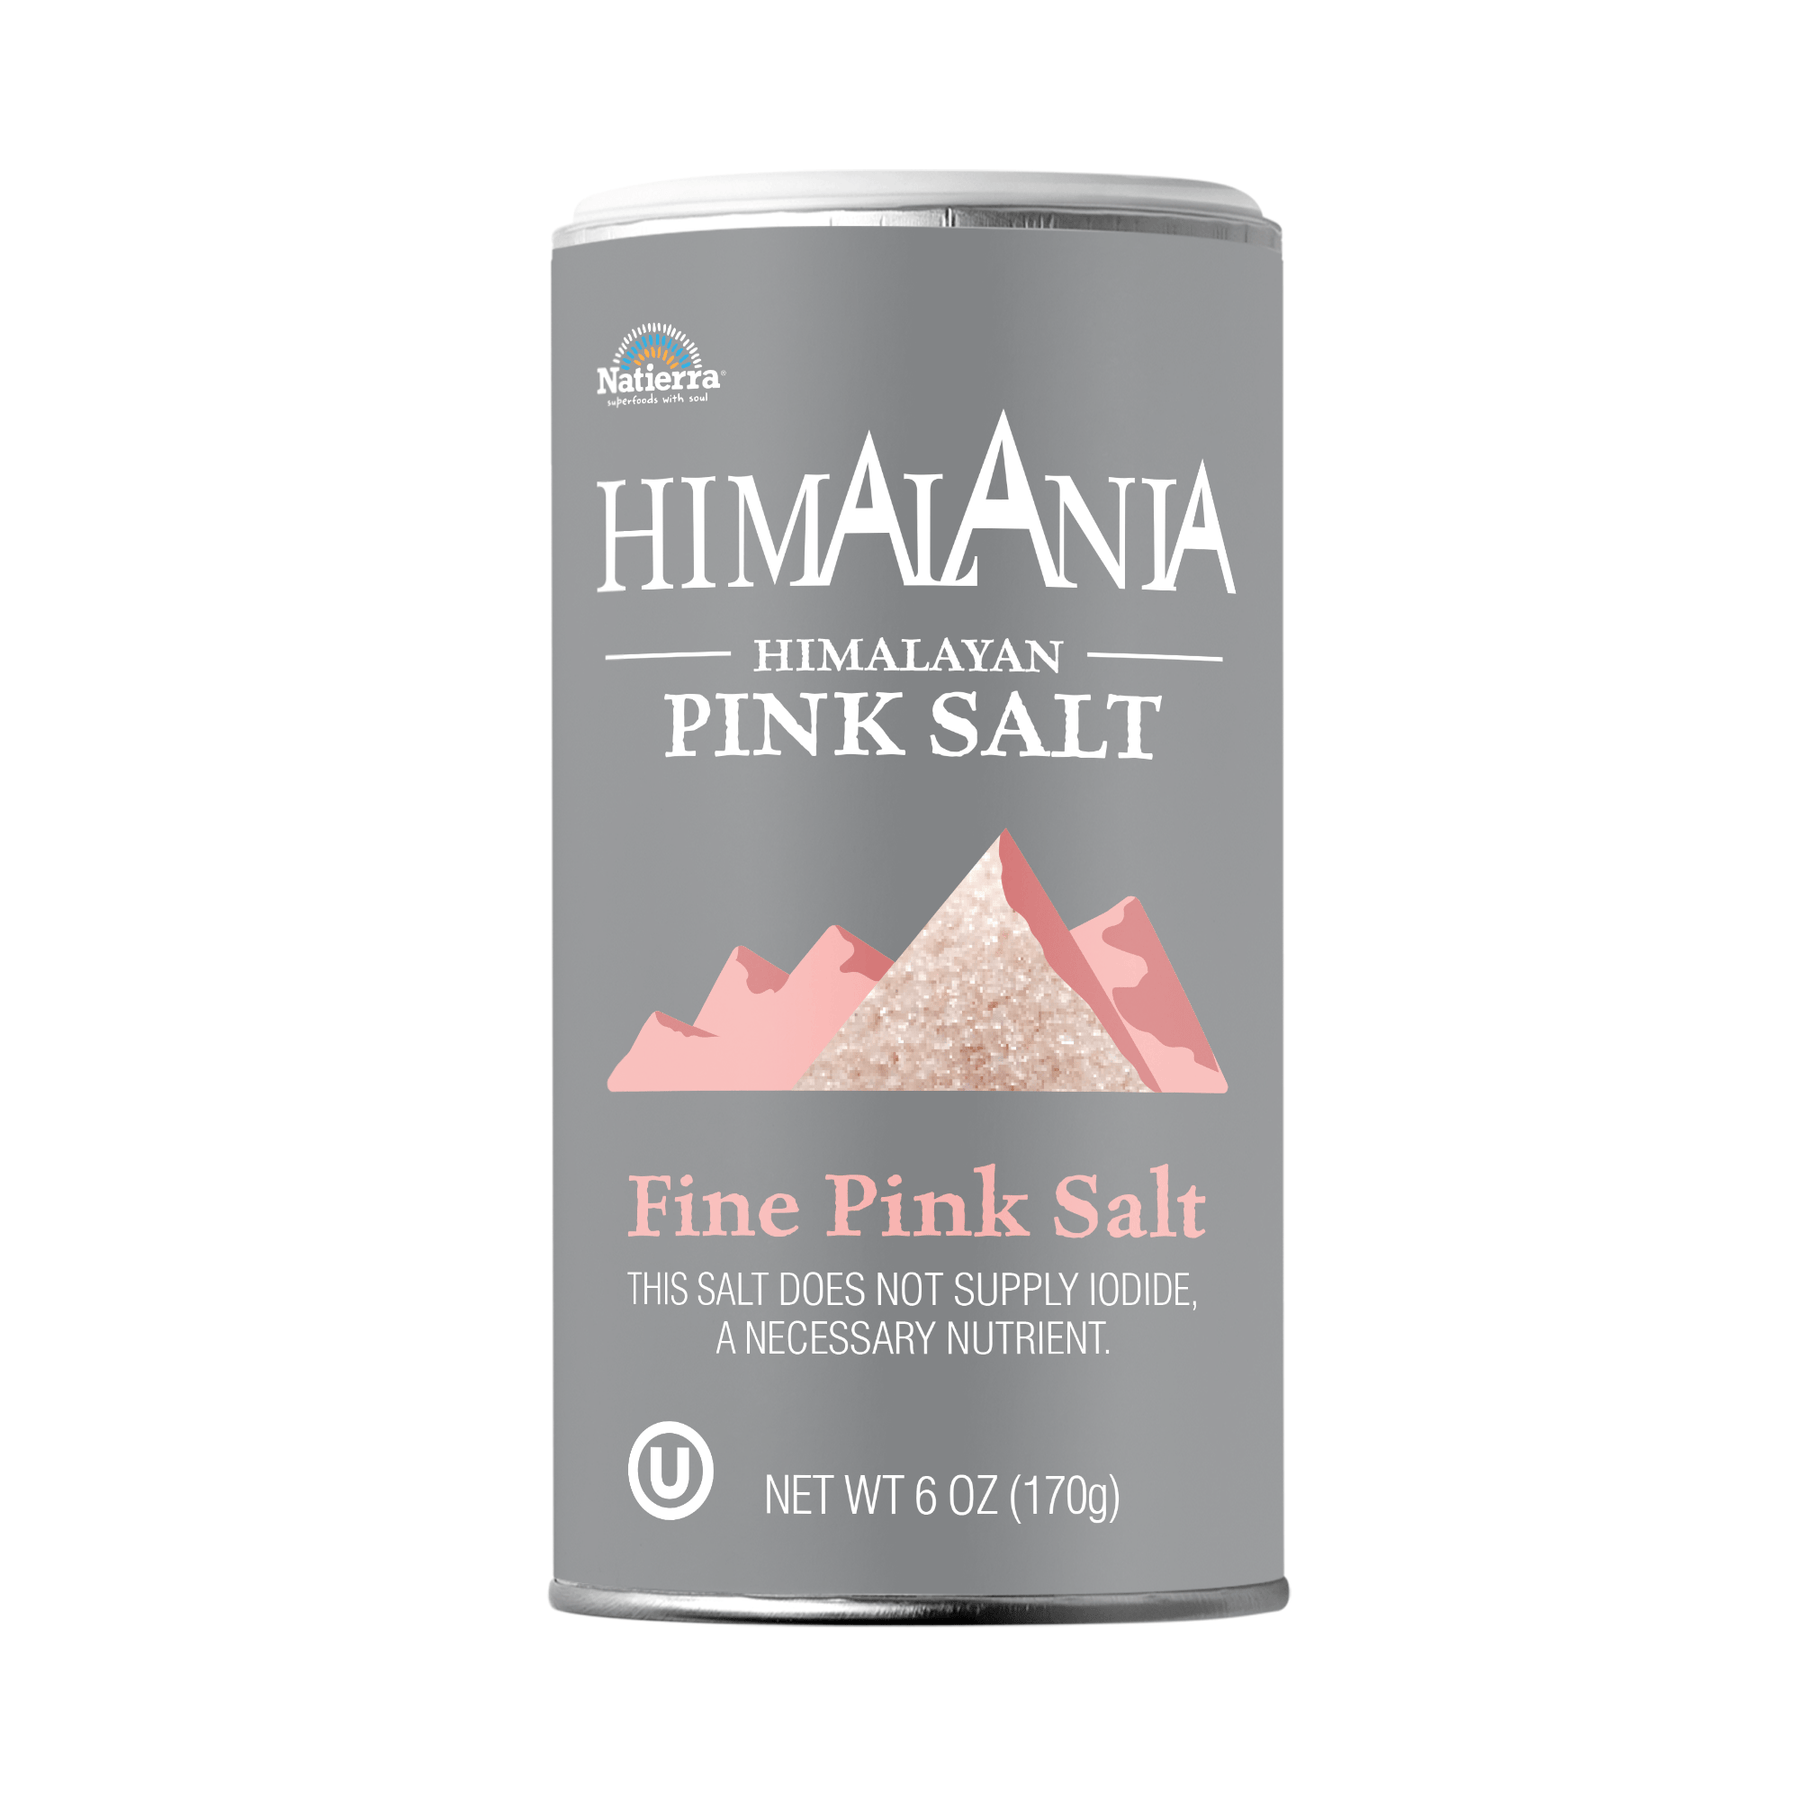 Natierra Himalania Fine Pink Salt 6 oz shaker